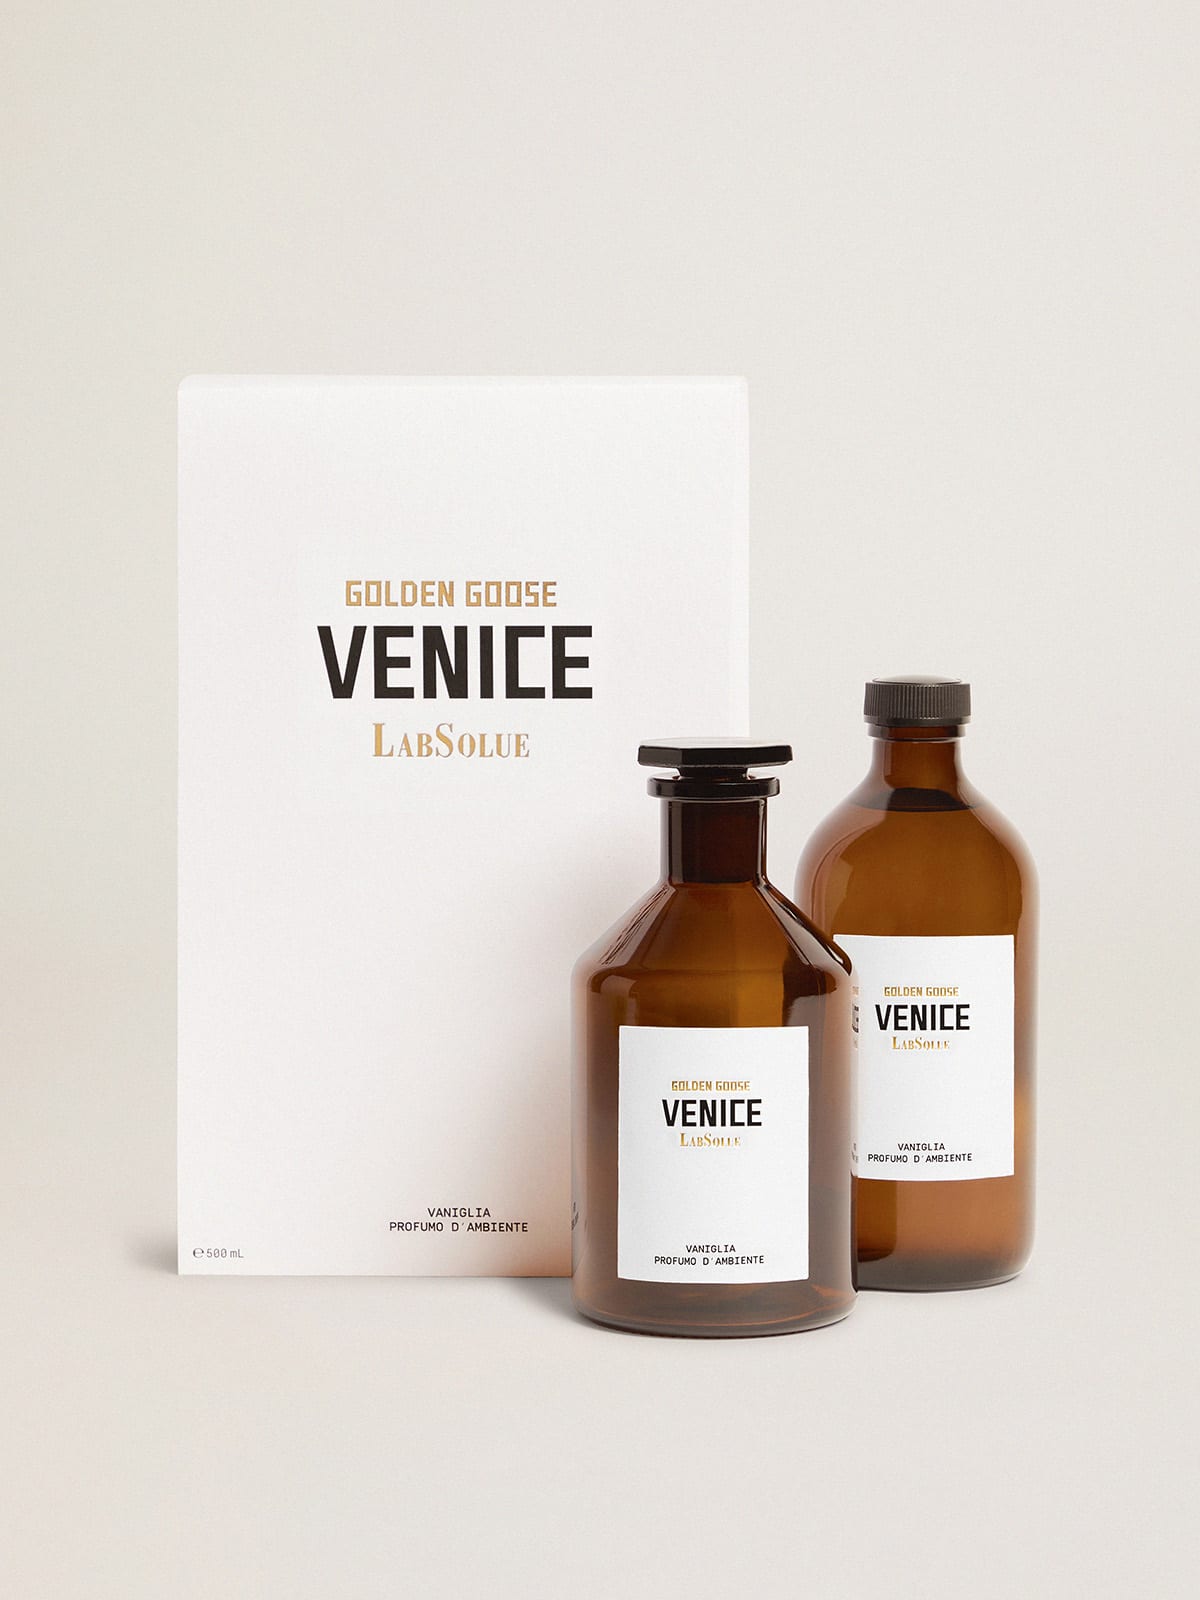 Golden Goose - Venice Essence Vaniglia Fragranza d'ambiente 500 ml in 